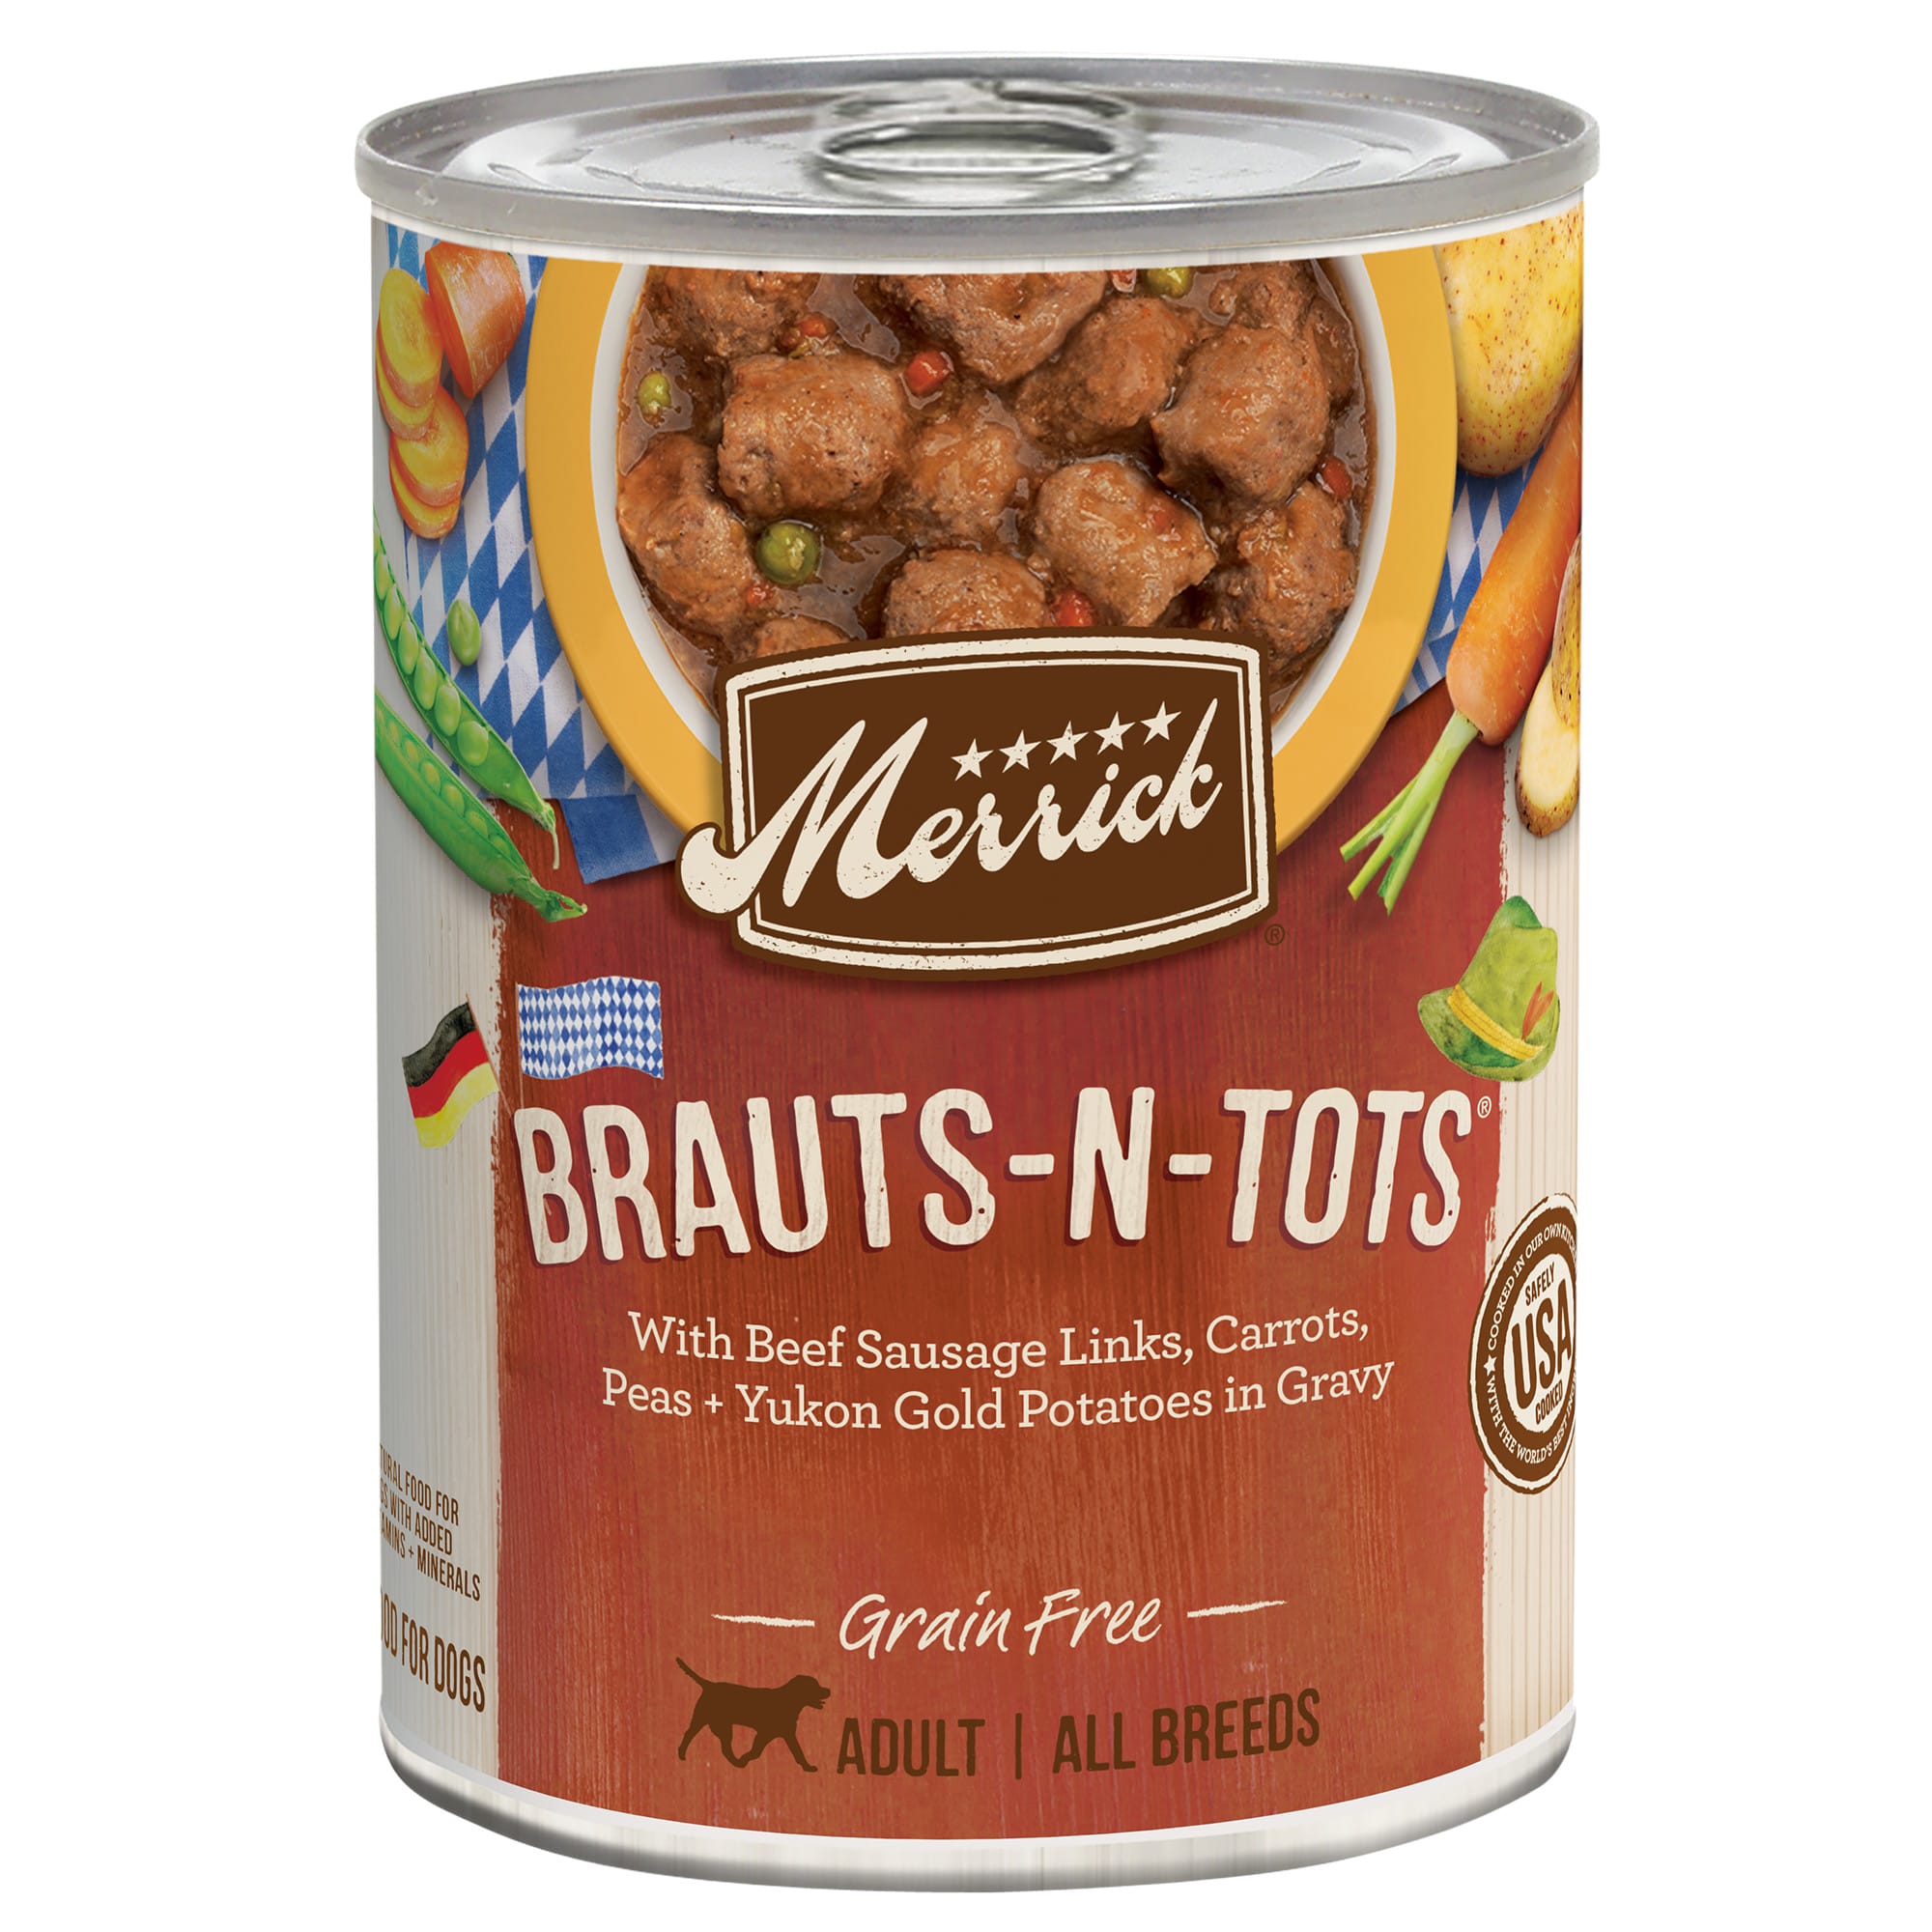 Merrick Grain Free BrautsnTots Wet Dog Food, 12.7 oz